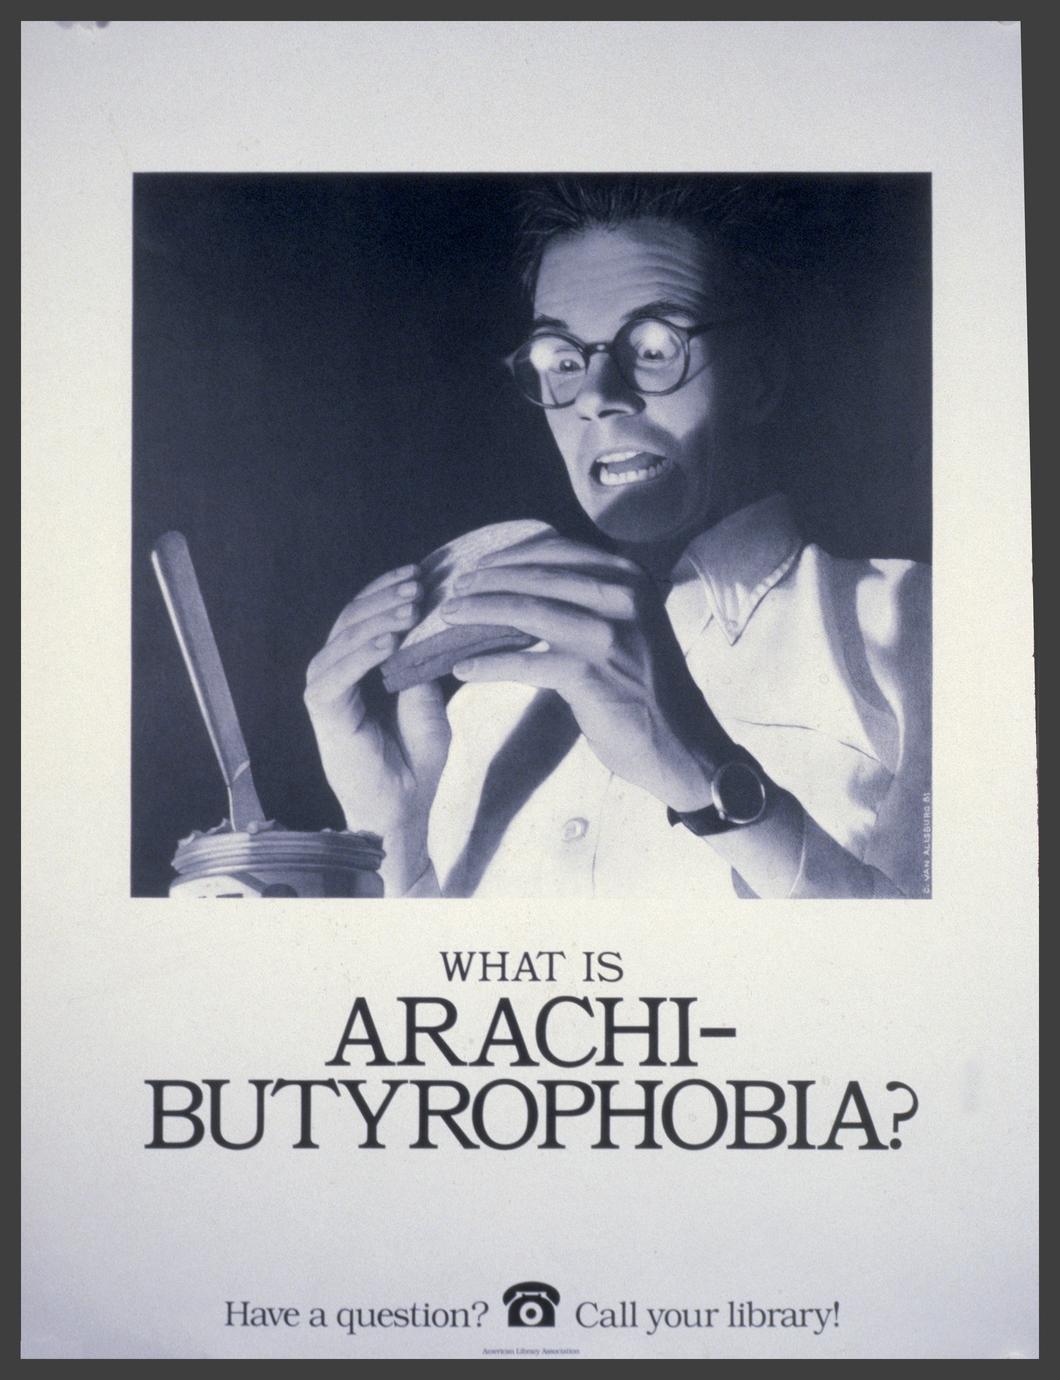 What is arachibutyrophobia